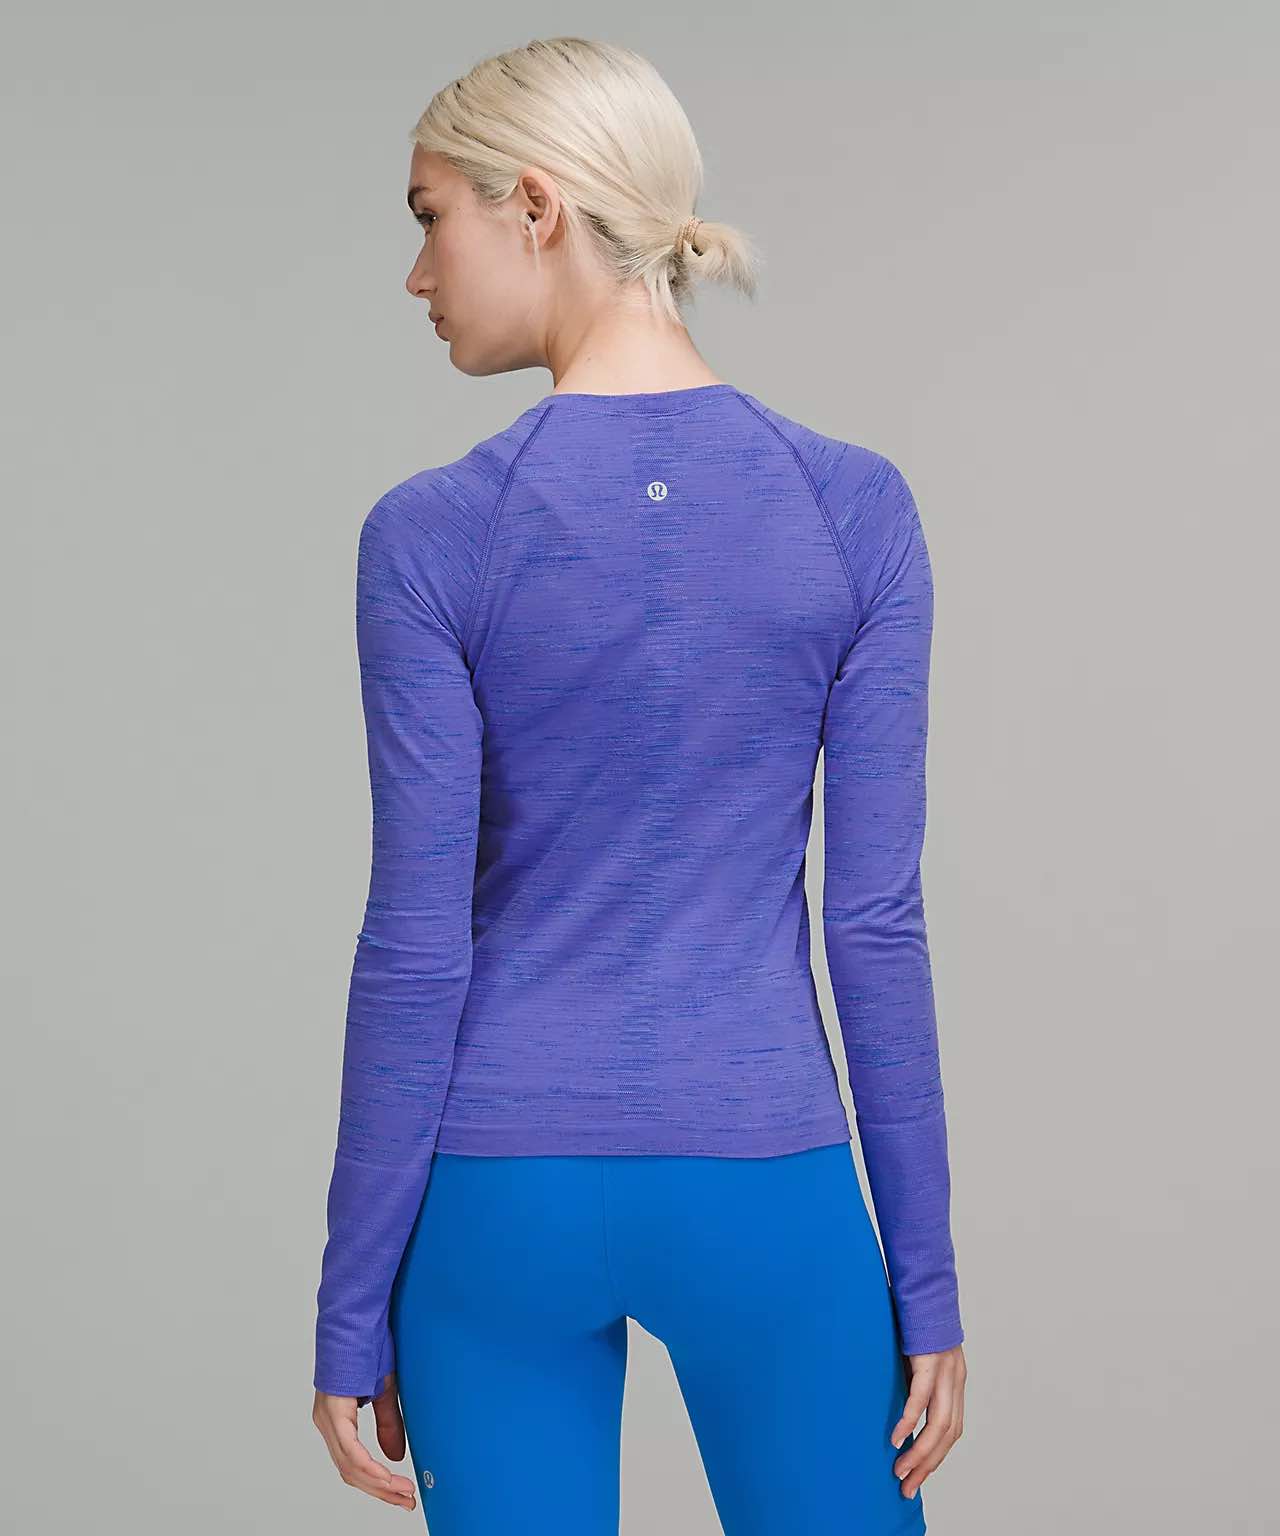 lululemon women's running top, lululemon purple swiftly, Swiftly Tech Long Sleeve Shirt 2.0 Race Length - lululemon color- Chroma Check Charged indigo 3